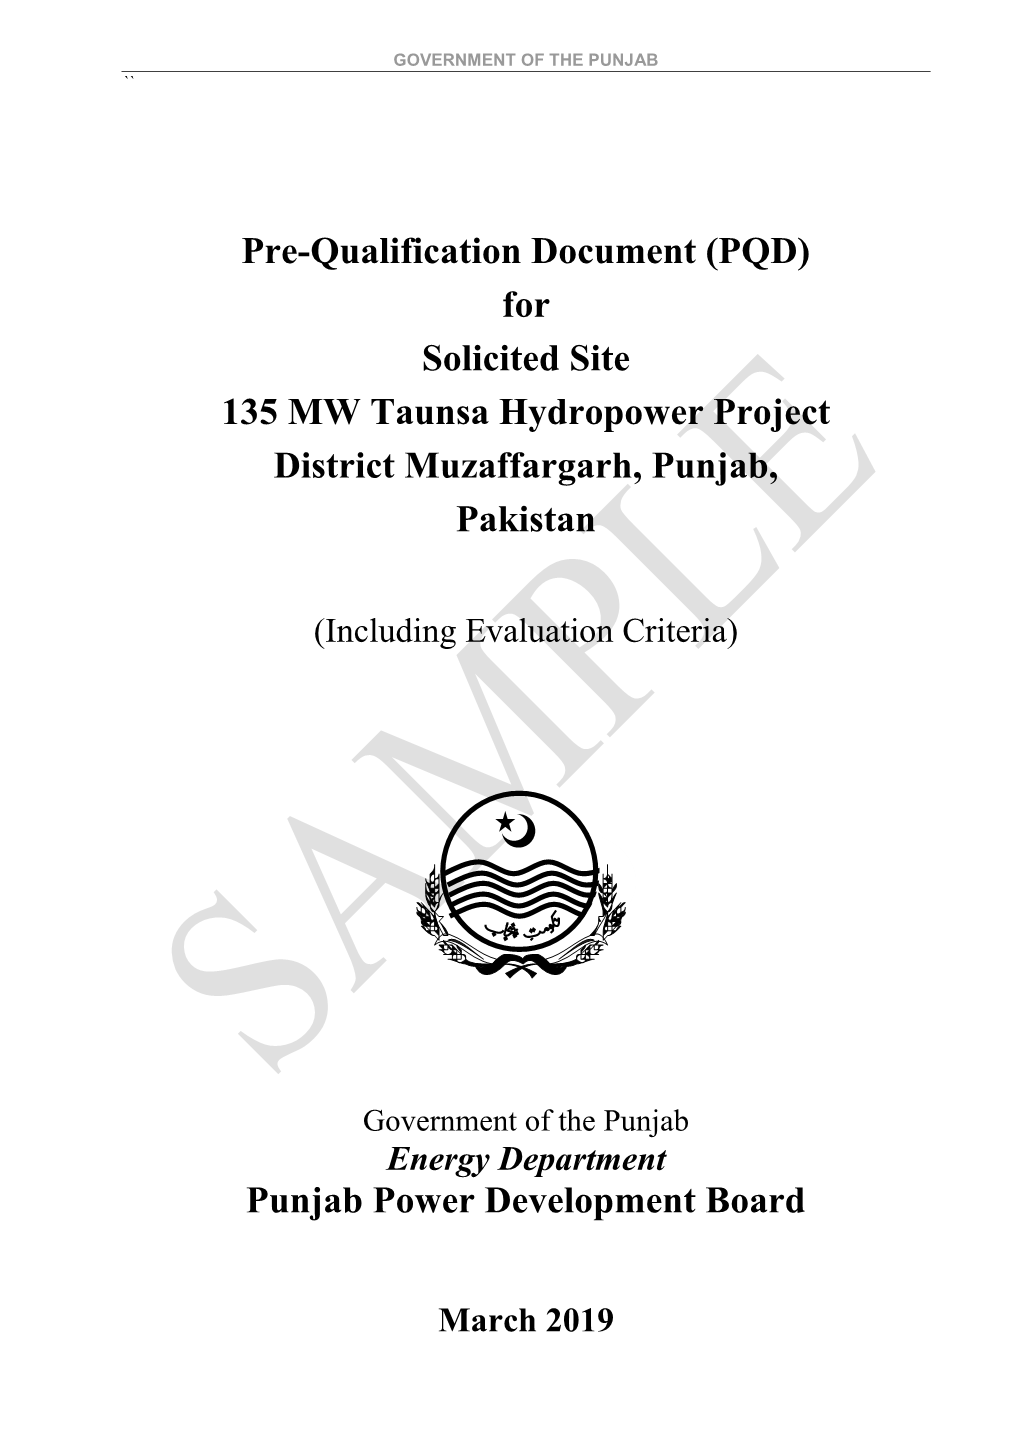 Pre-Qualification Document (PQD) for Solicited Site 135 MW Taunsa Hydropower Project District Muzaffargarh, Punjab, Pakistan